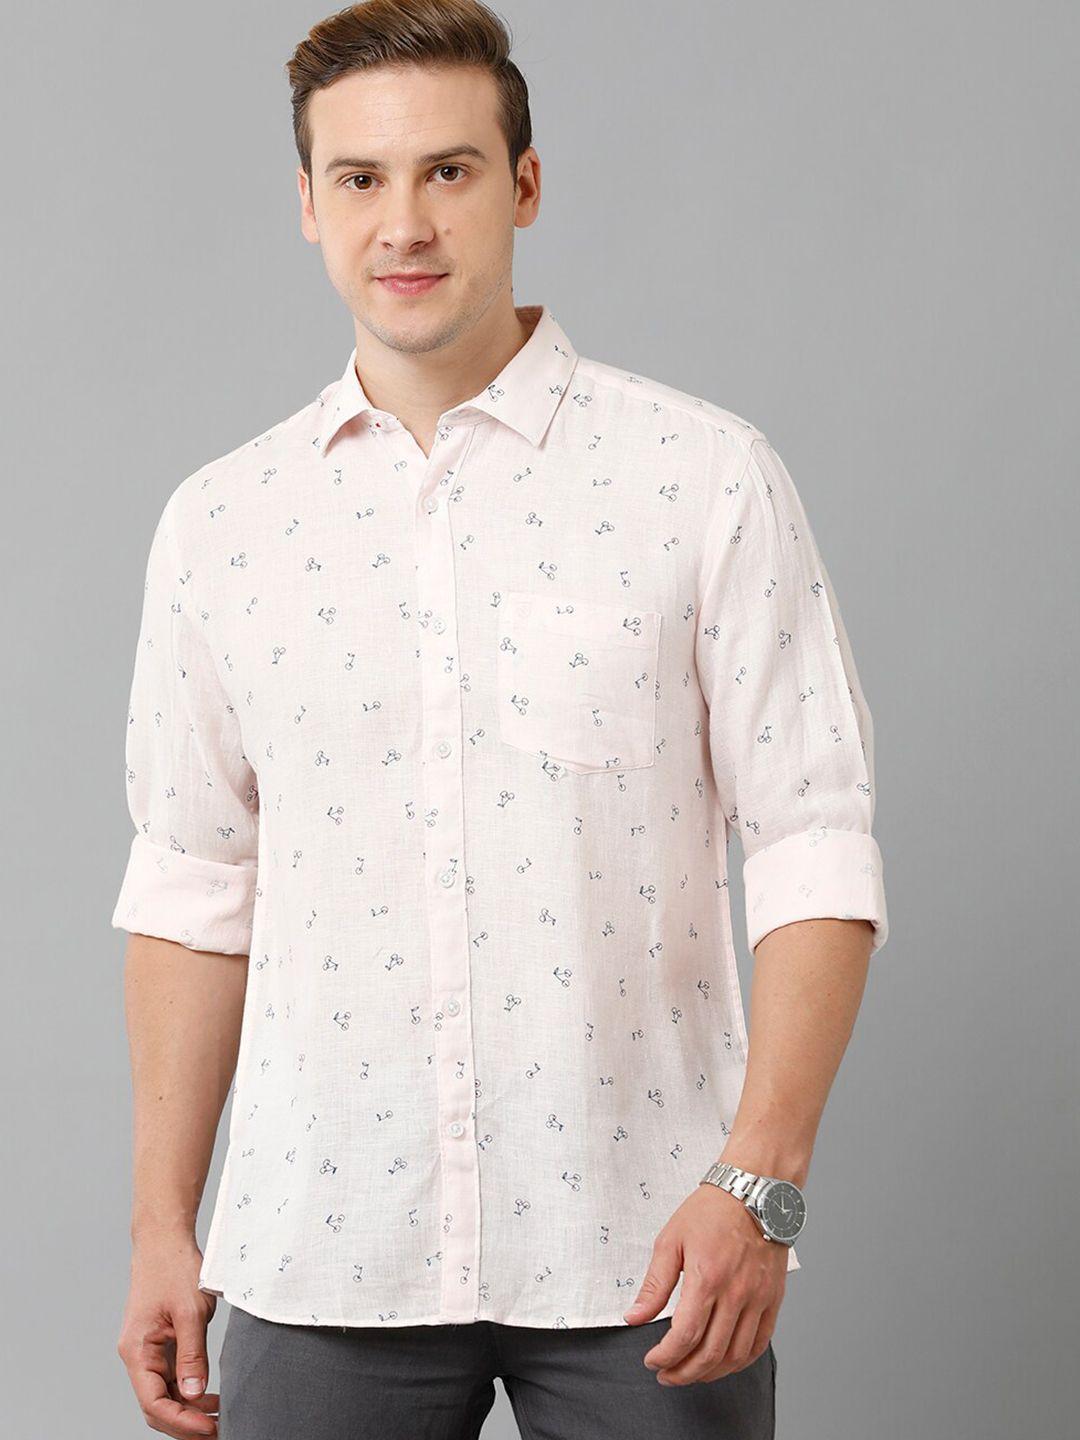 linen-club-conversational-printed-spread-collar-pure-linen-casual-shirt